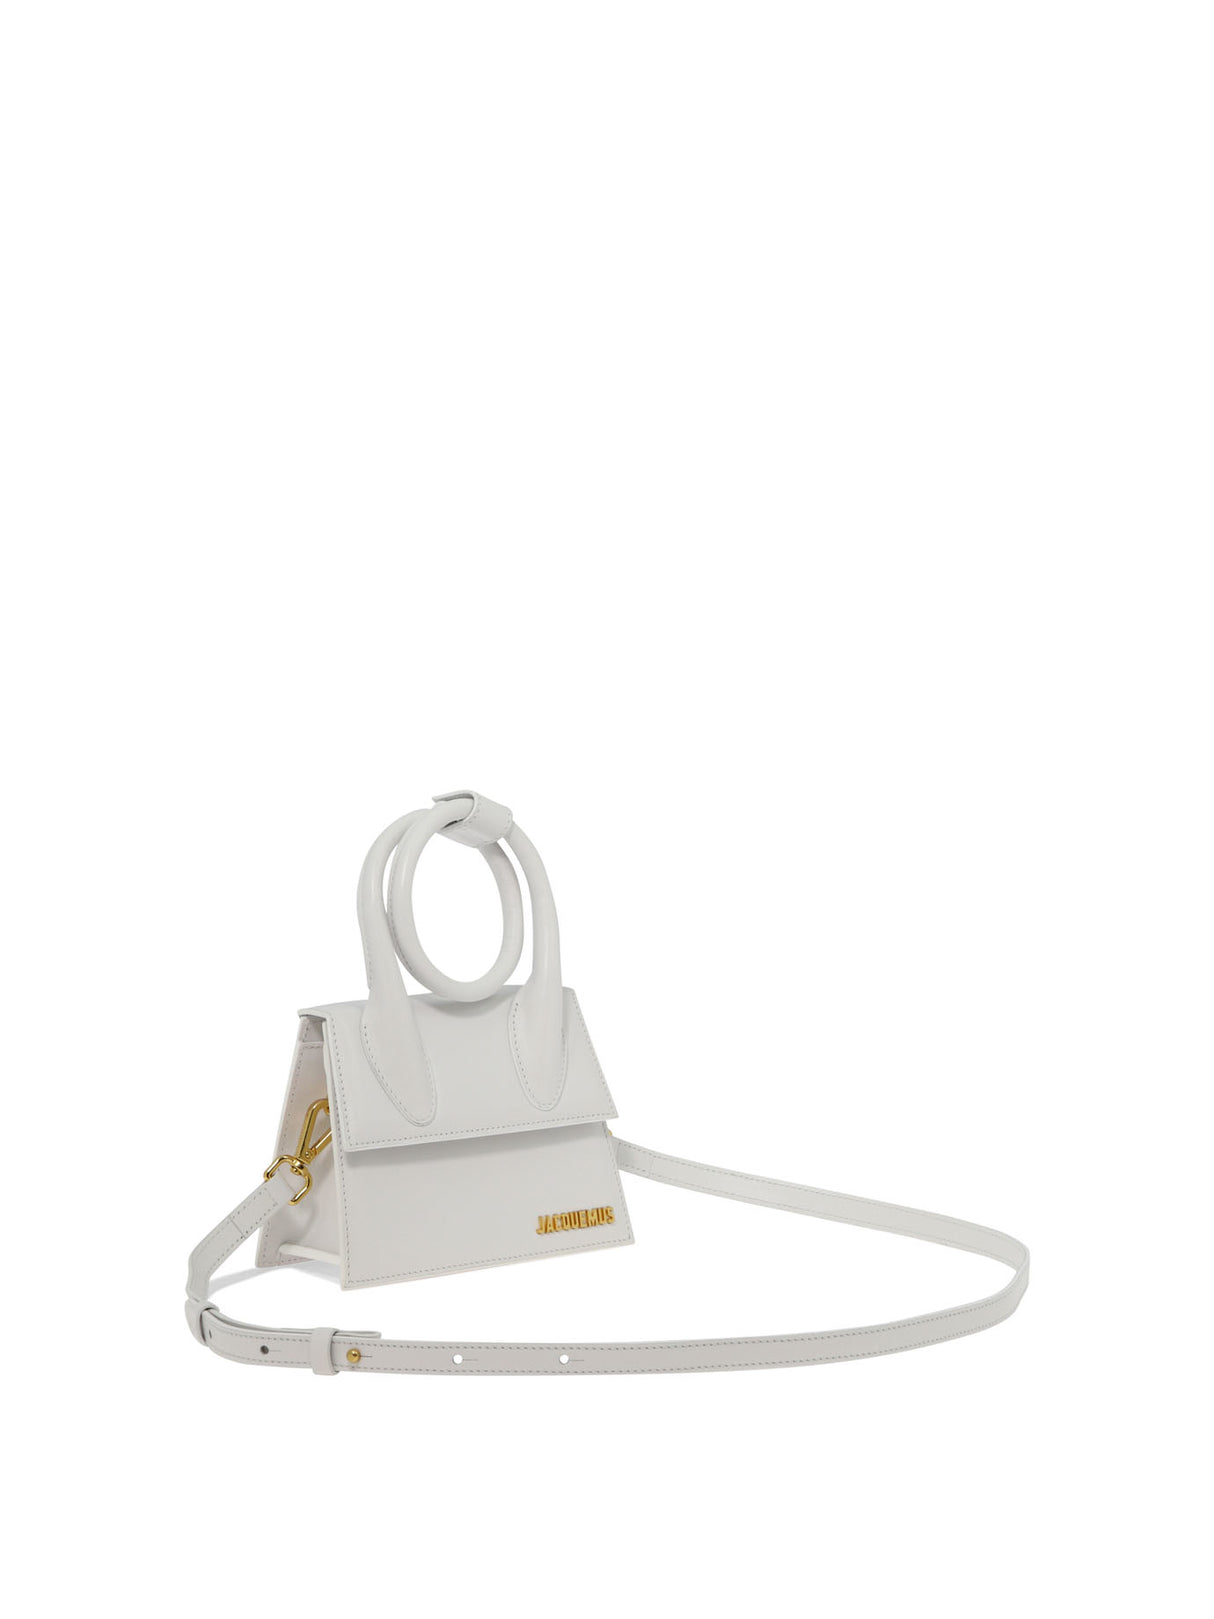 JACQUEMUS Le Chiquito Noeud Carryover Handbag - White